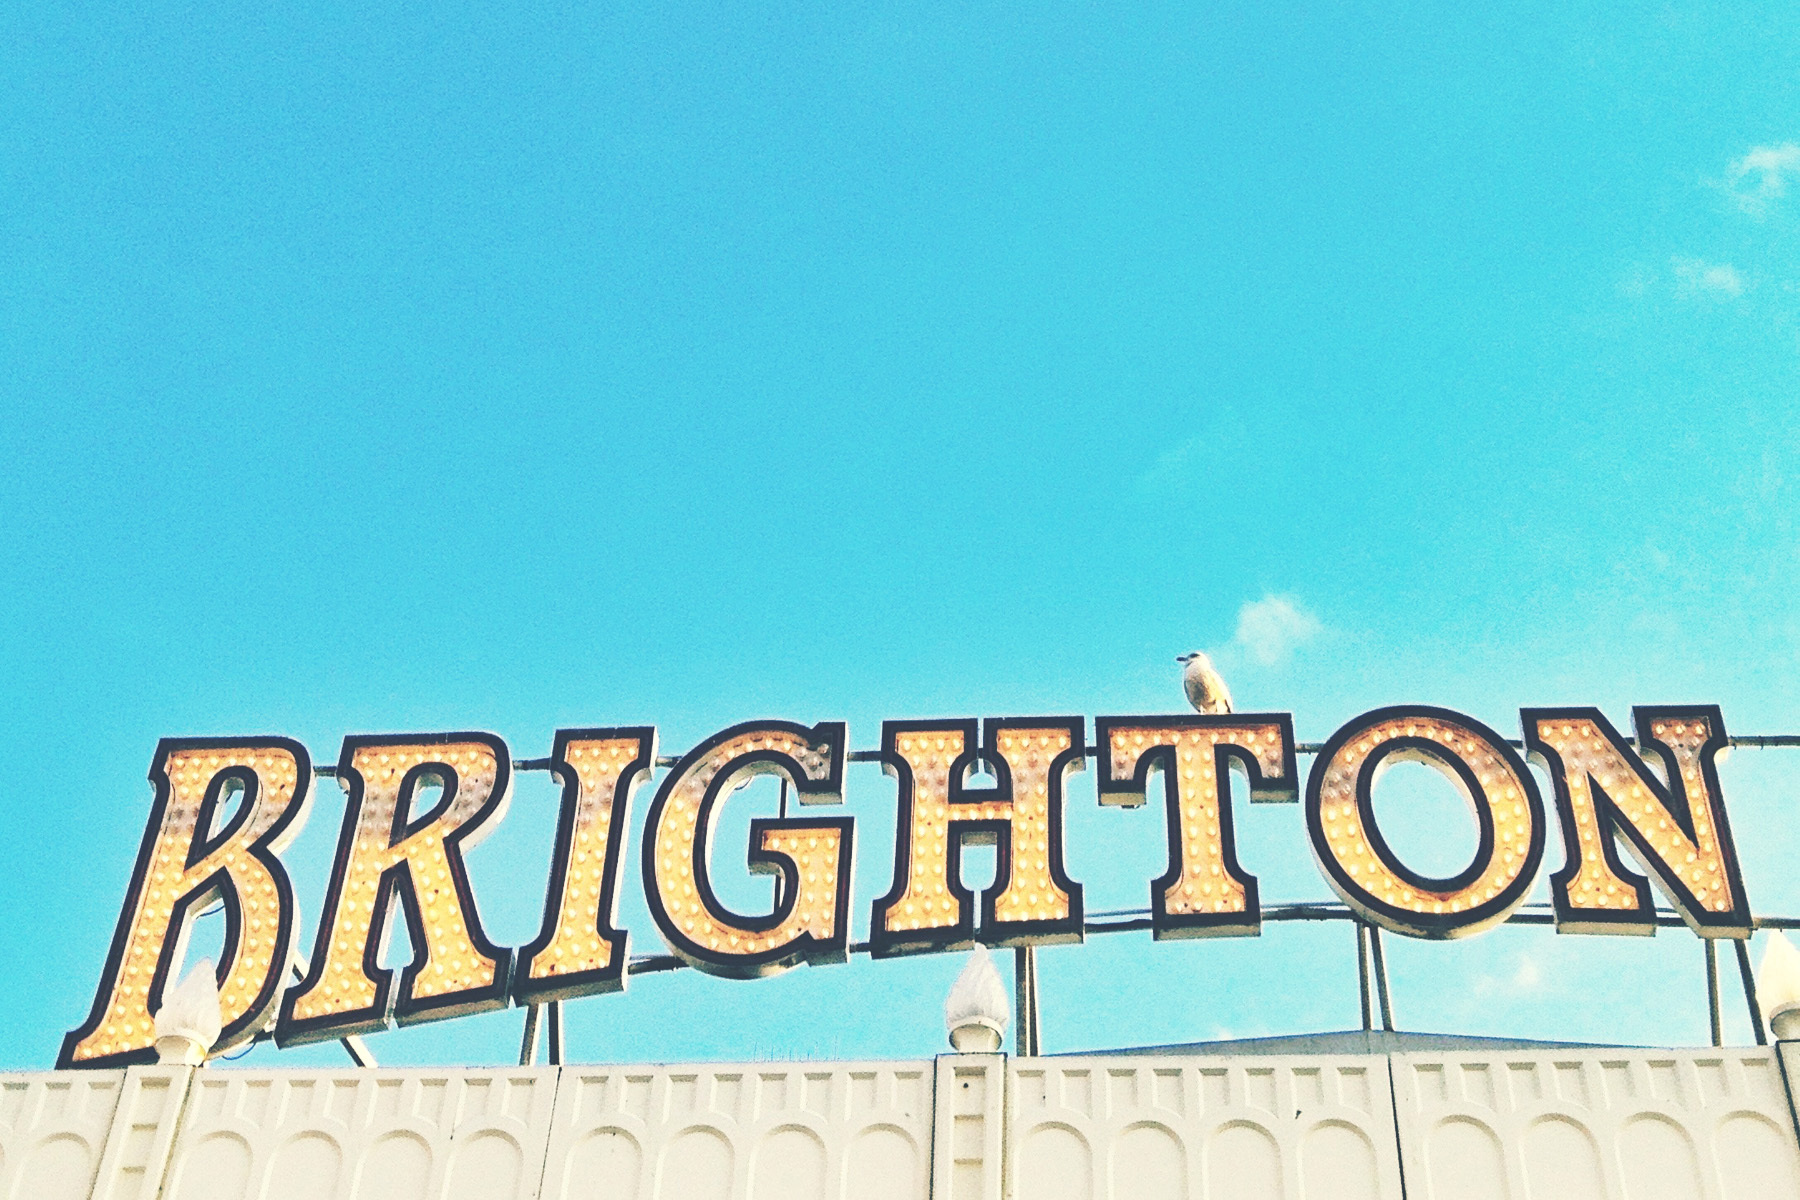 Brighton Pier, Brighton, East Sussex, England